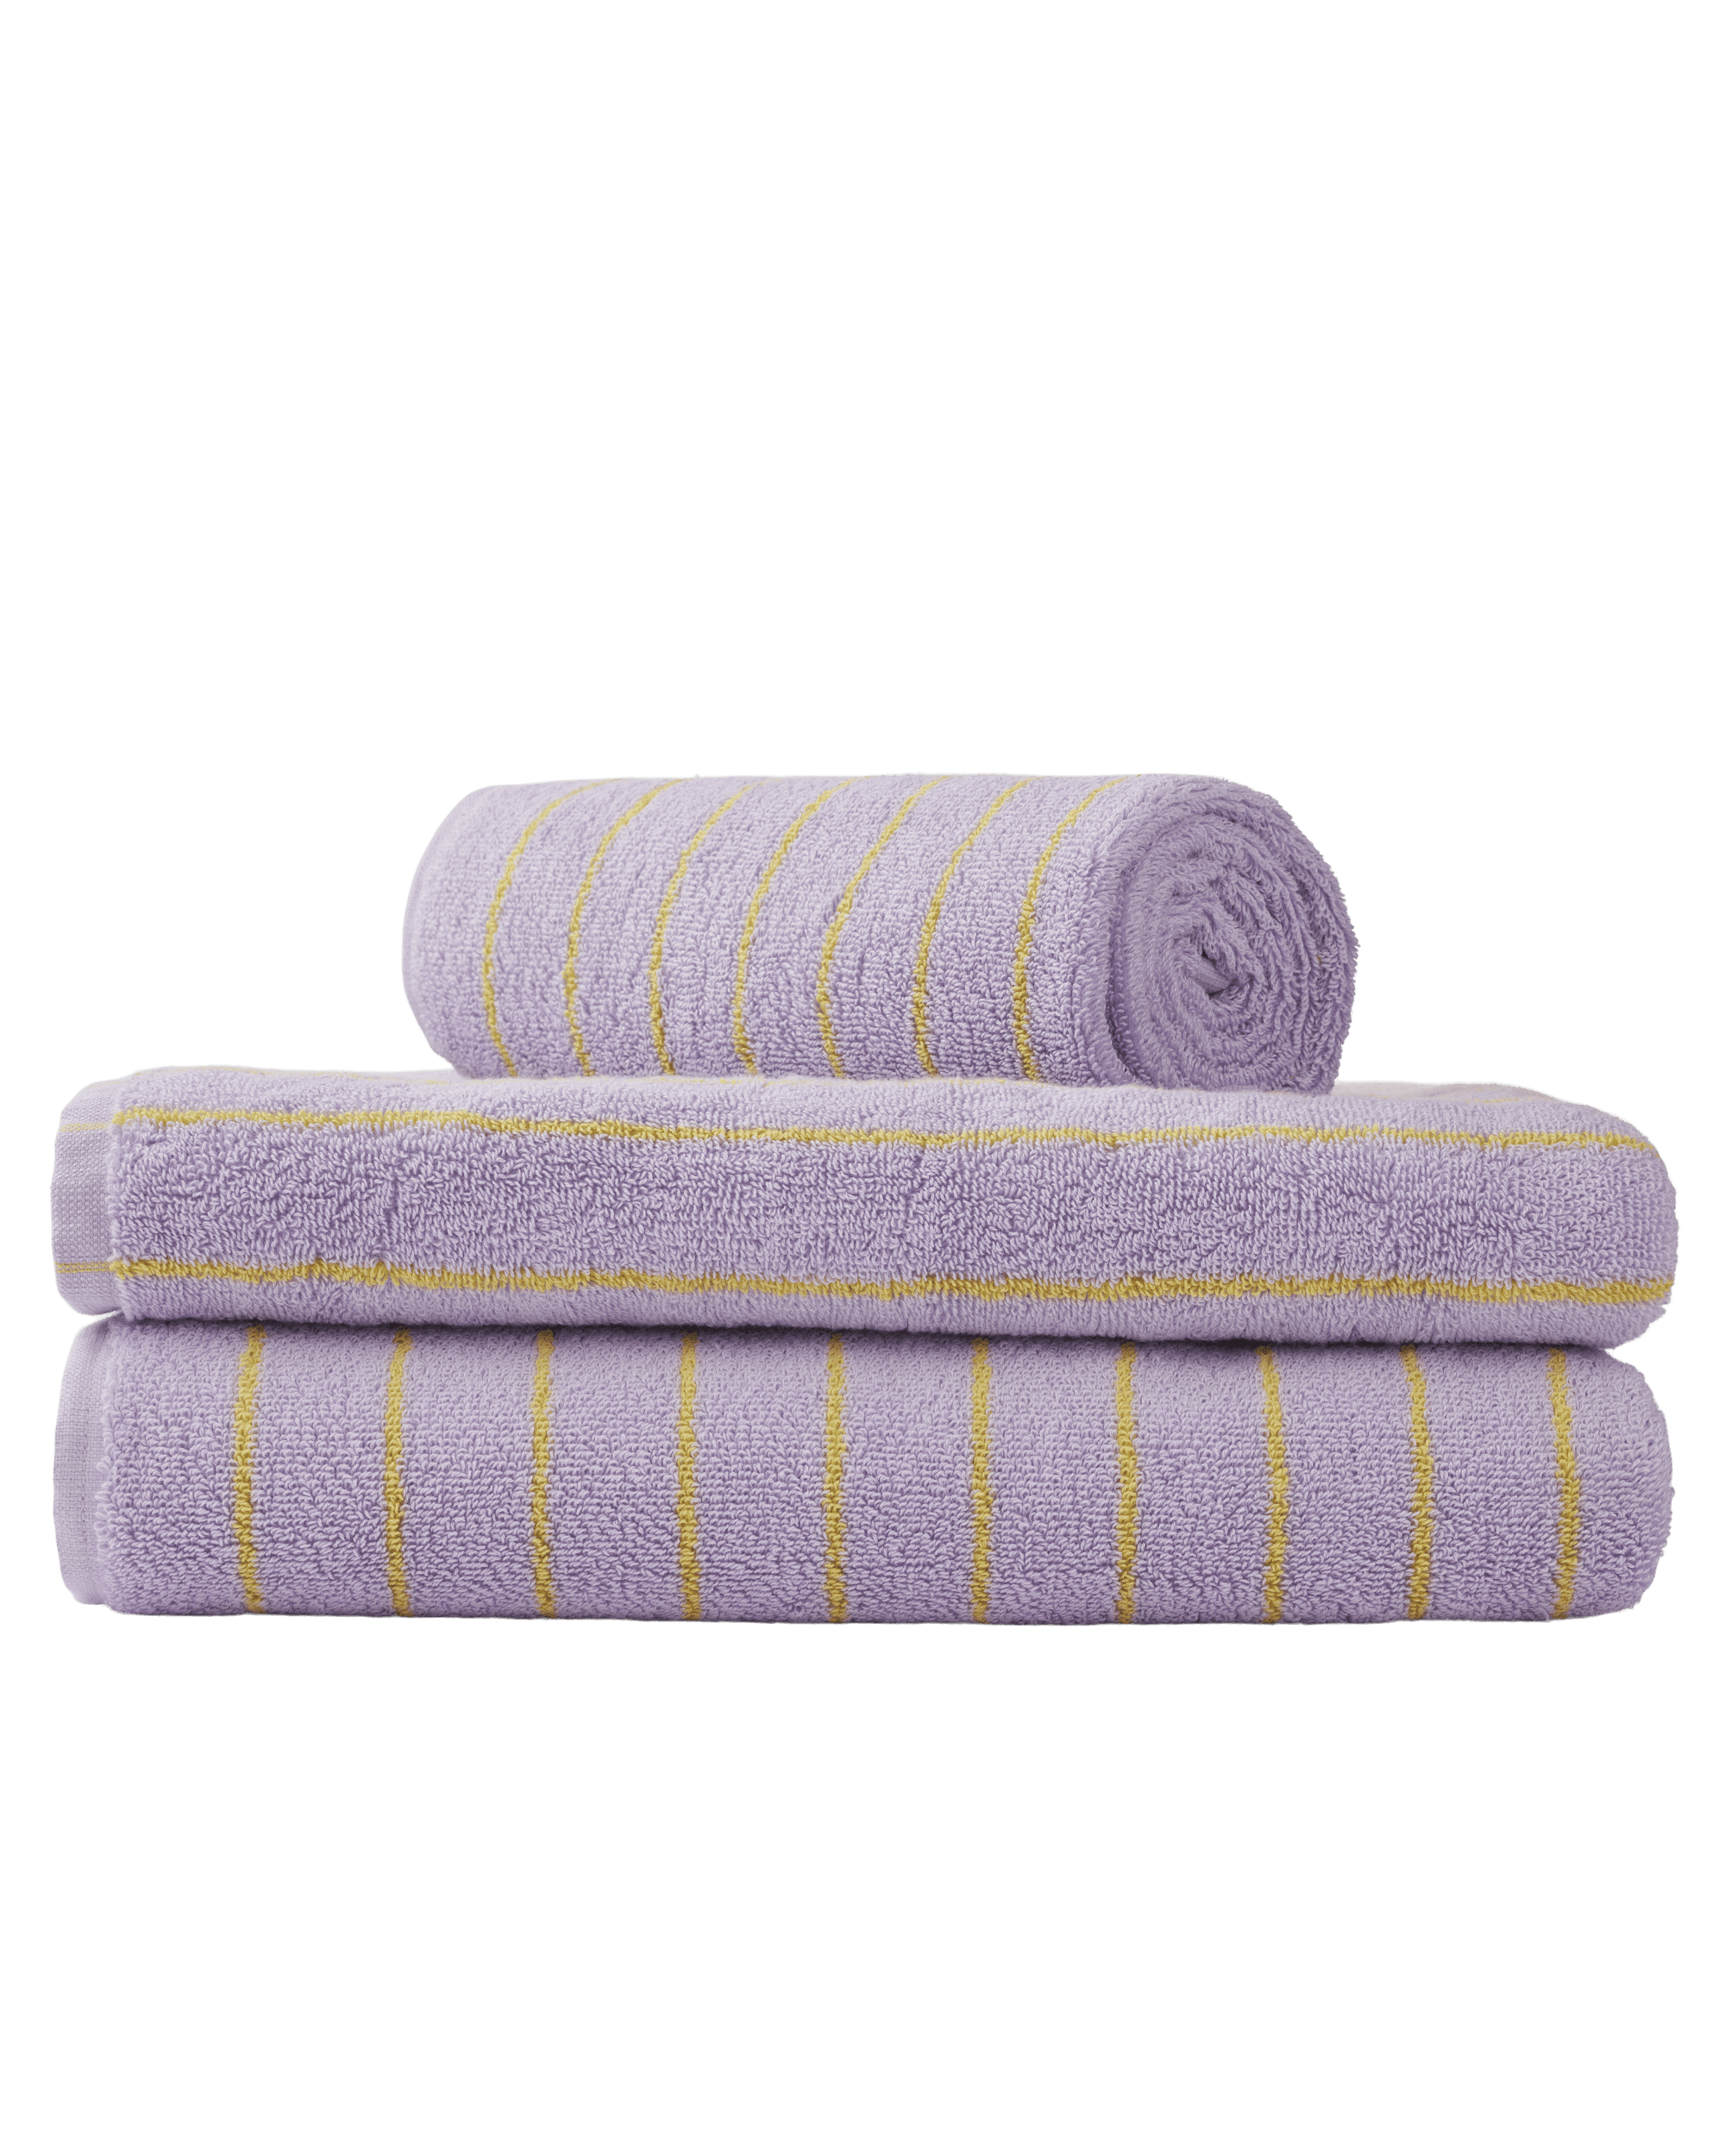 Bongusta, Product image, Naram håndklæder, lilac & neon yellow, 6 of 6}